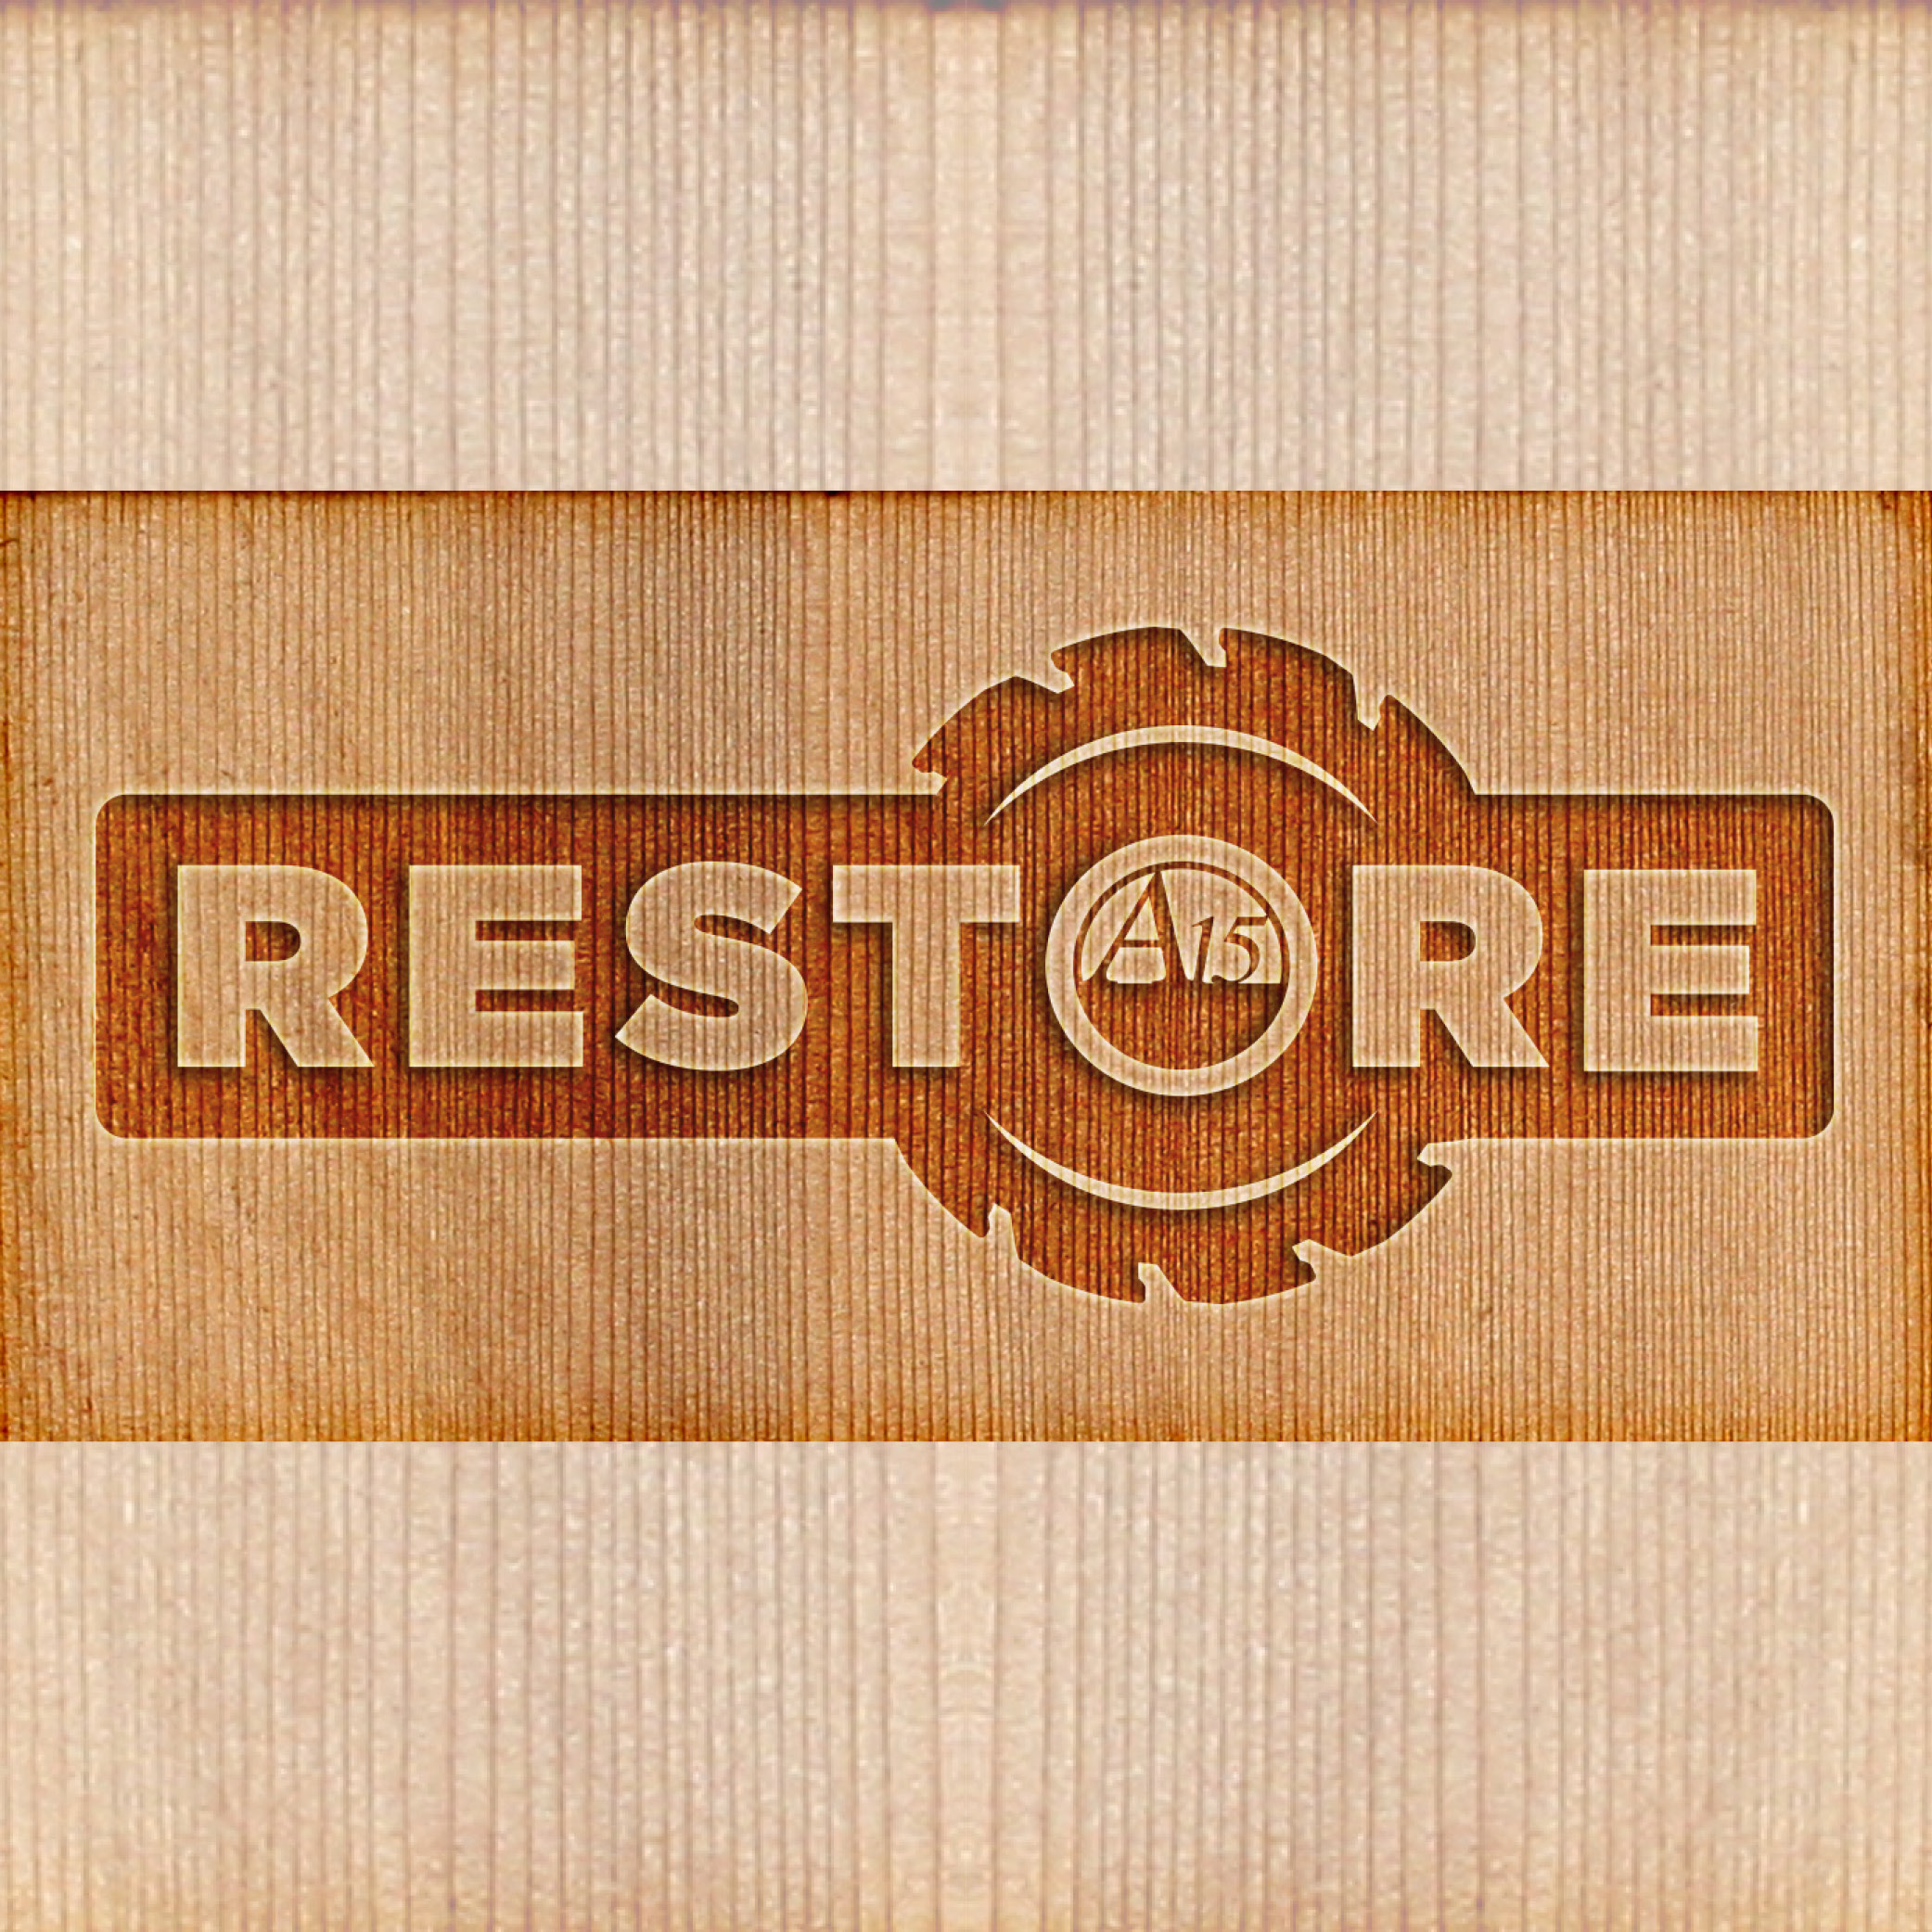 Restore Image